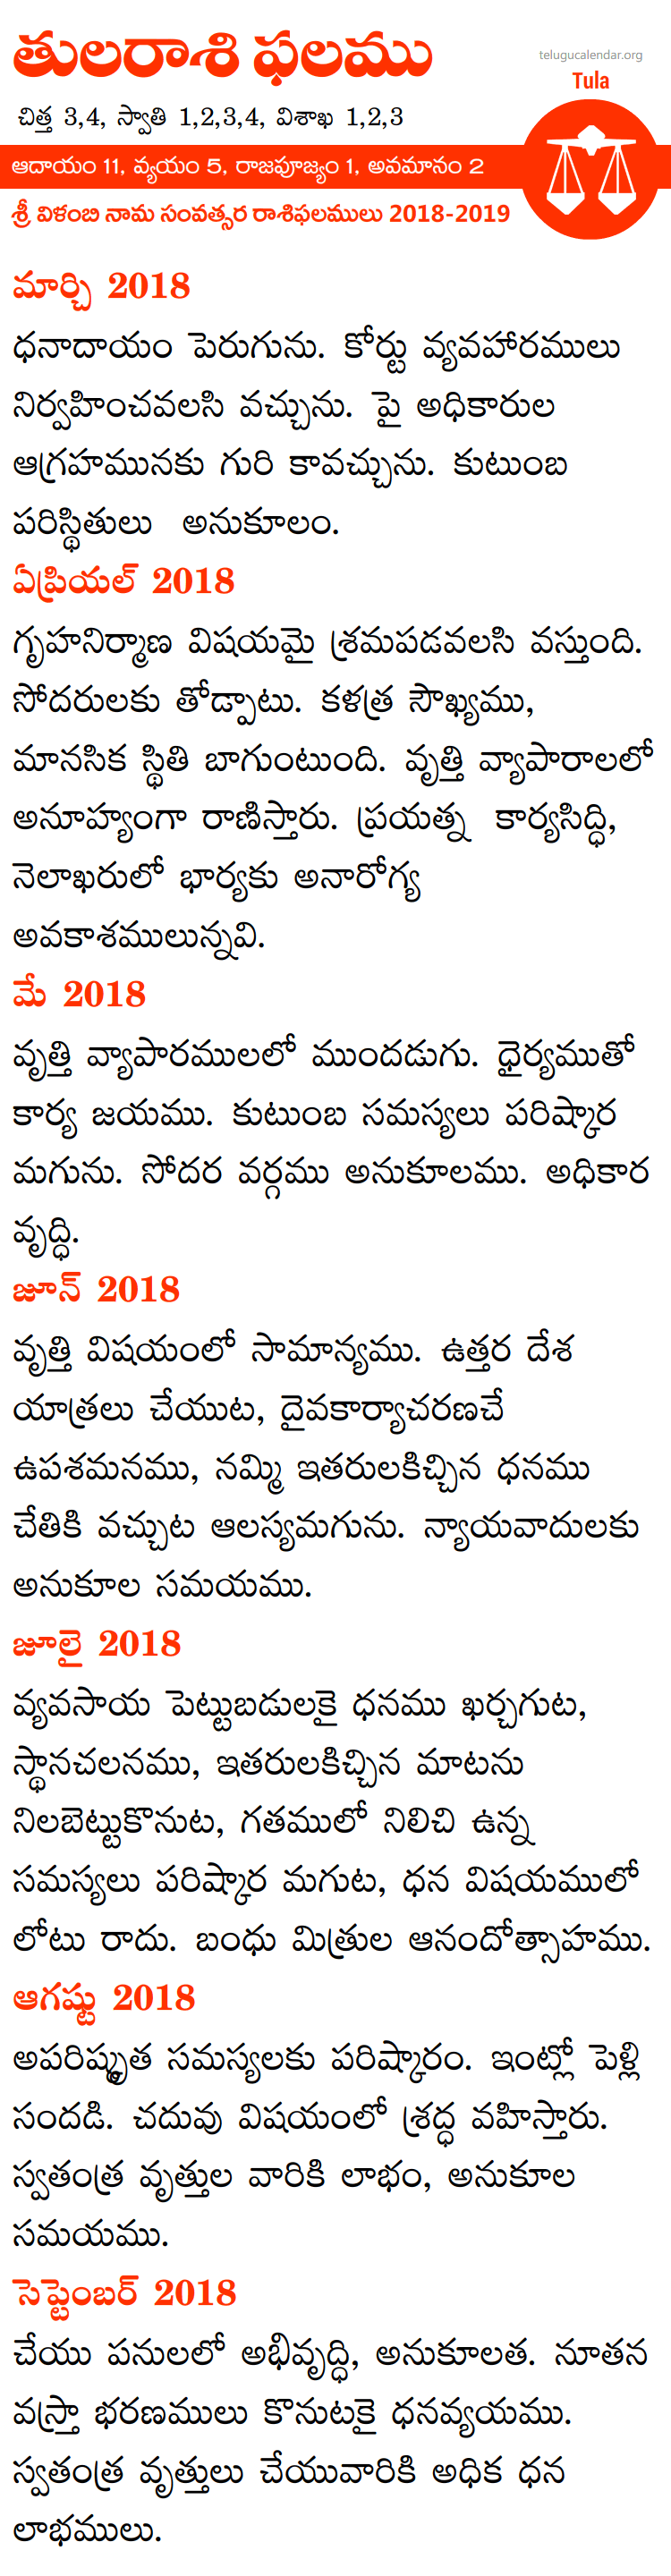 Tula Rasi Phalalu 2019-2020 Telugu